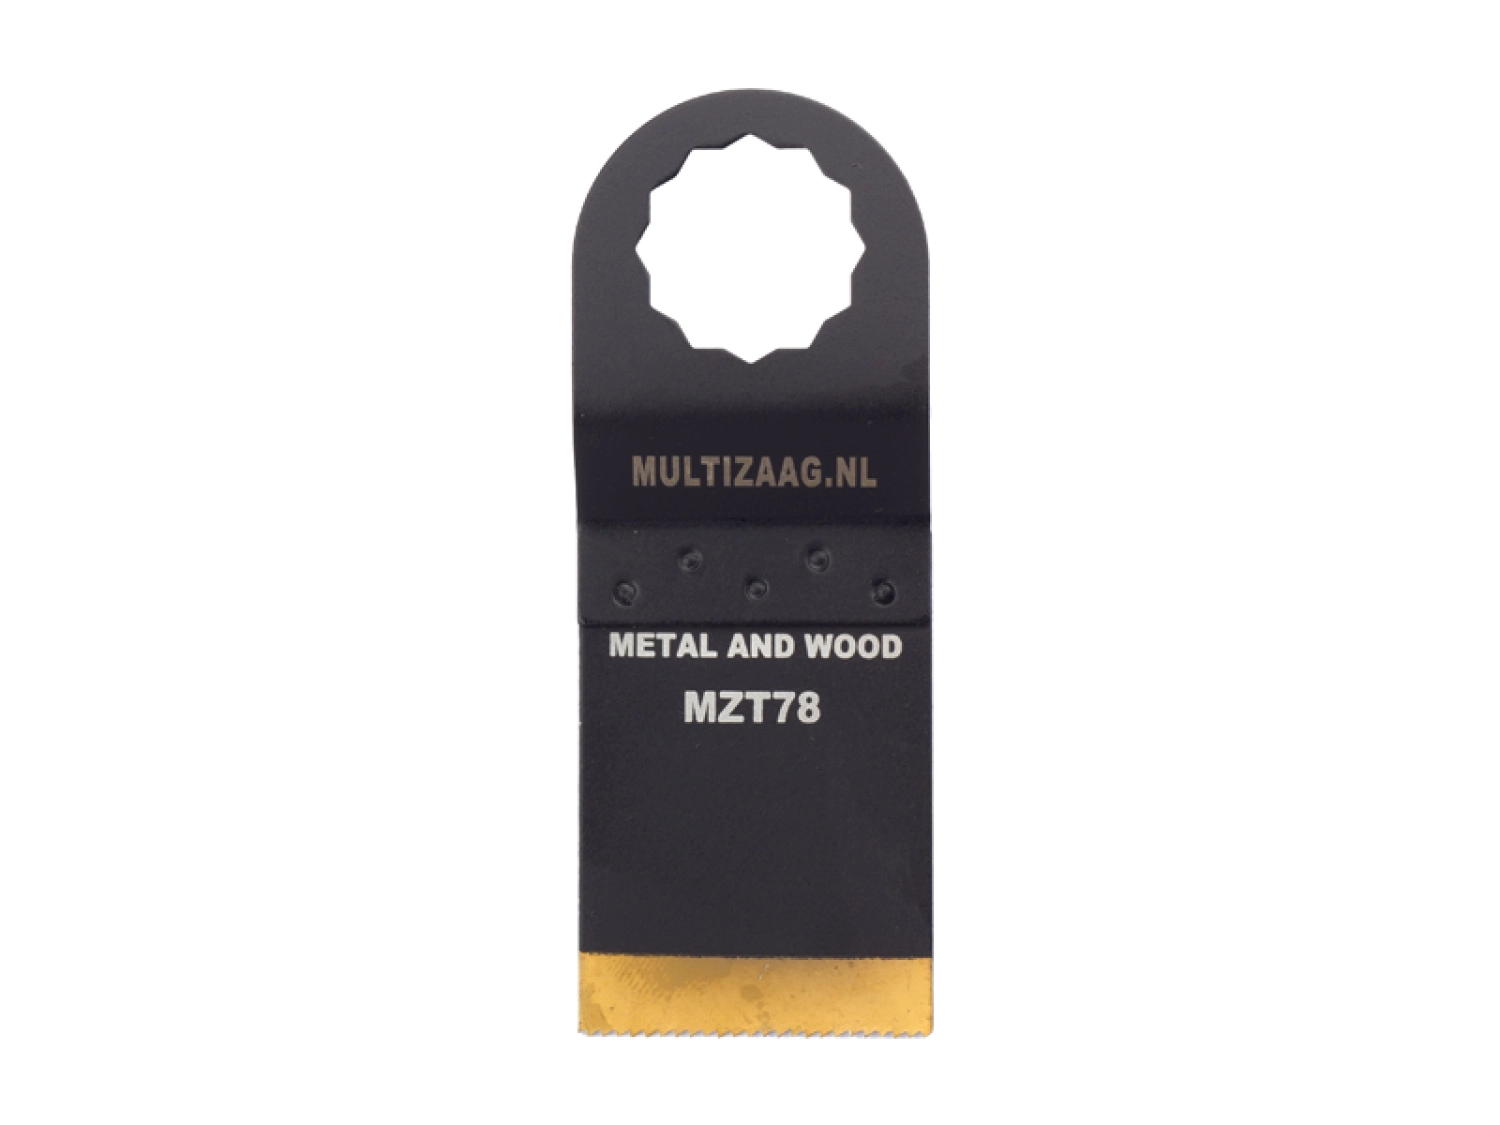 Multizaag MZT78 Lame pour outil multifonction